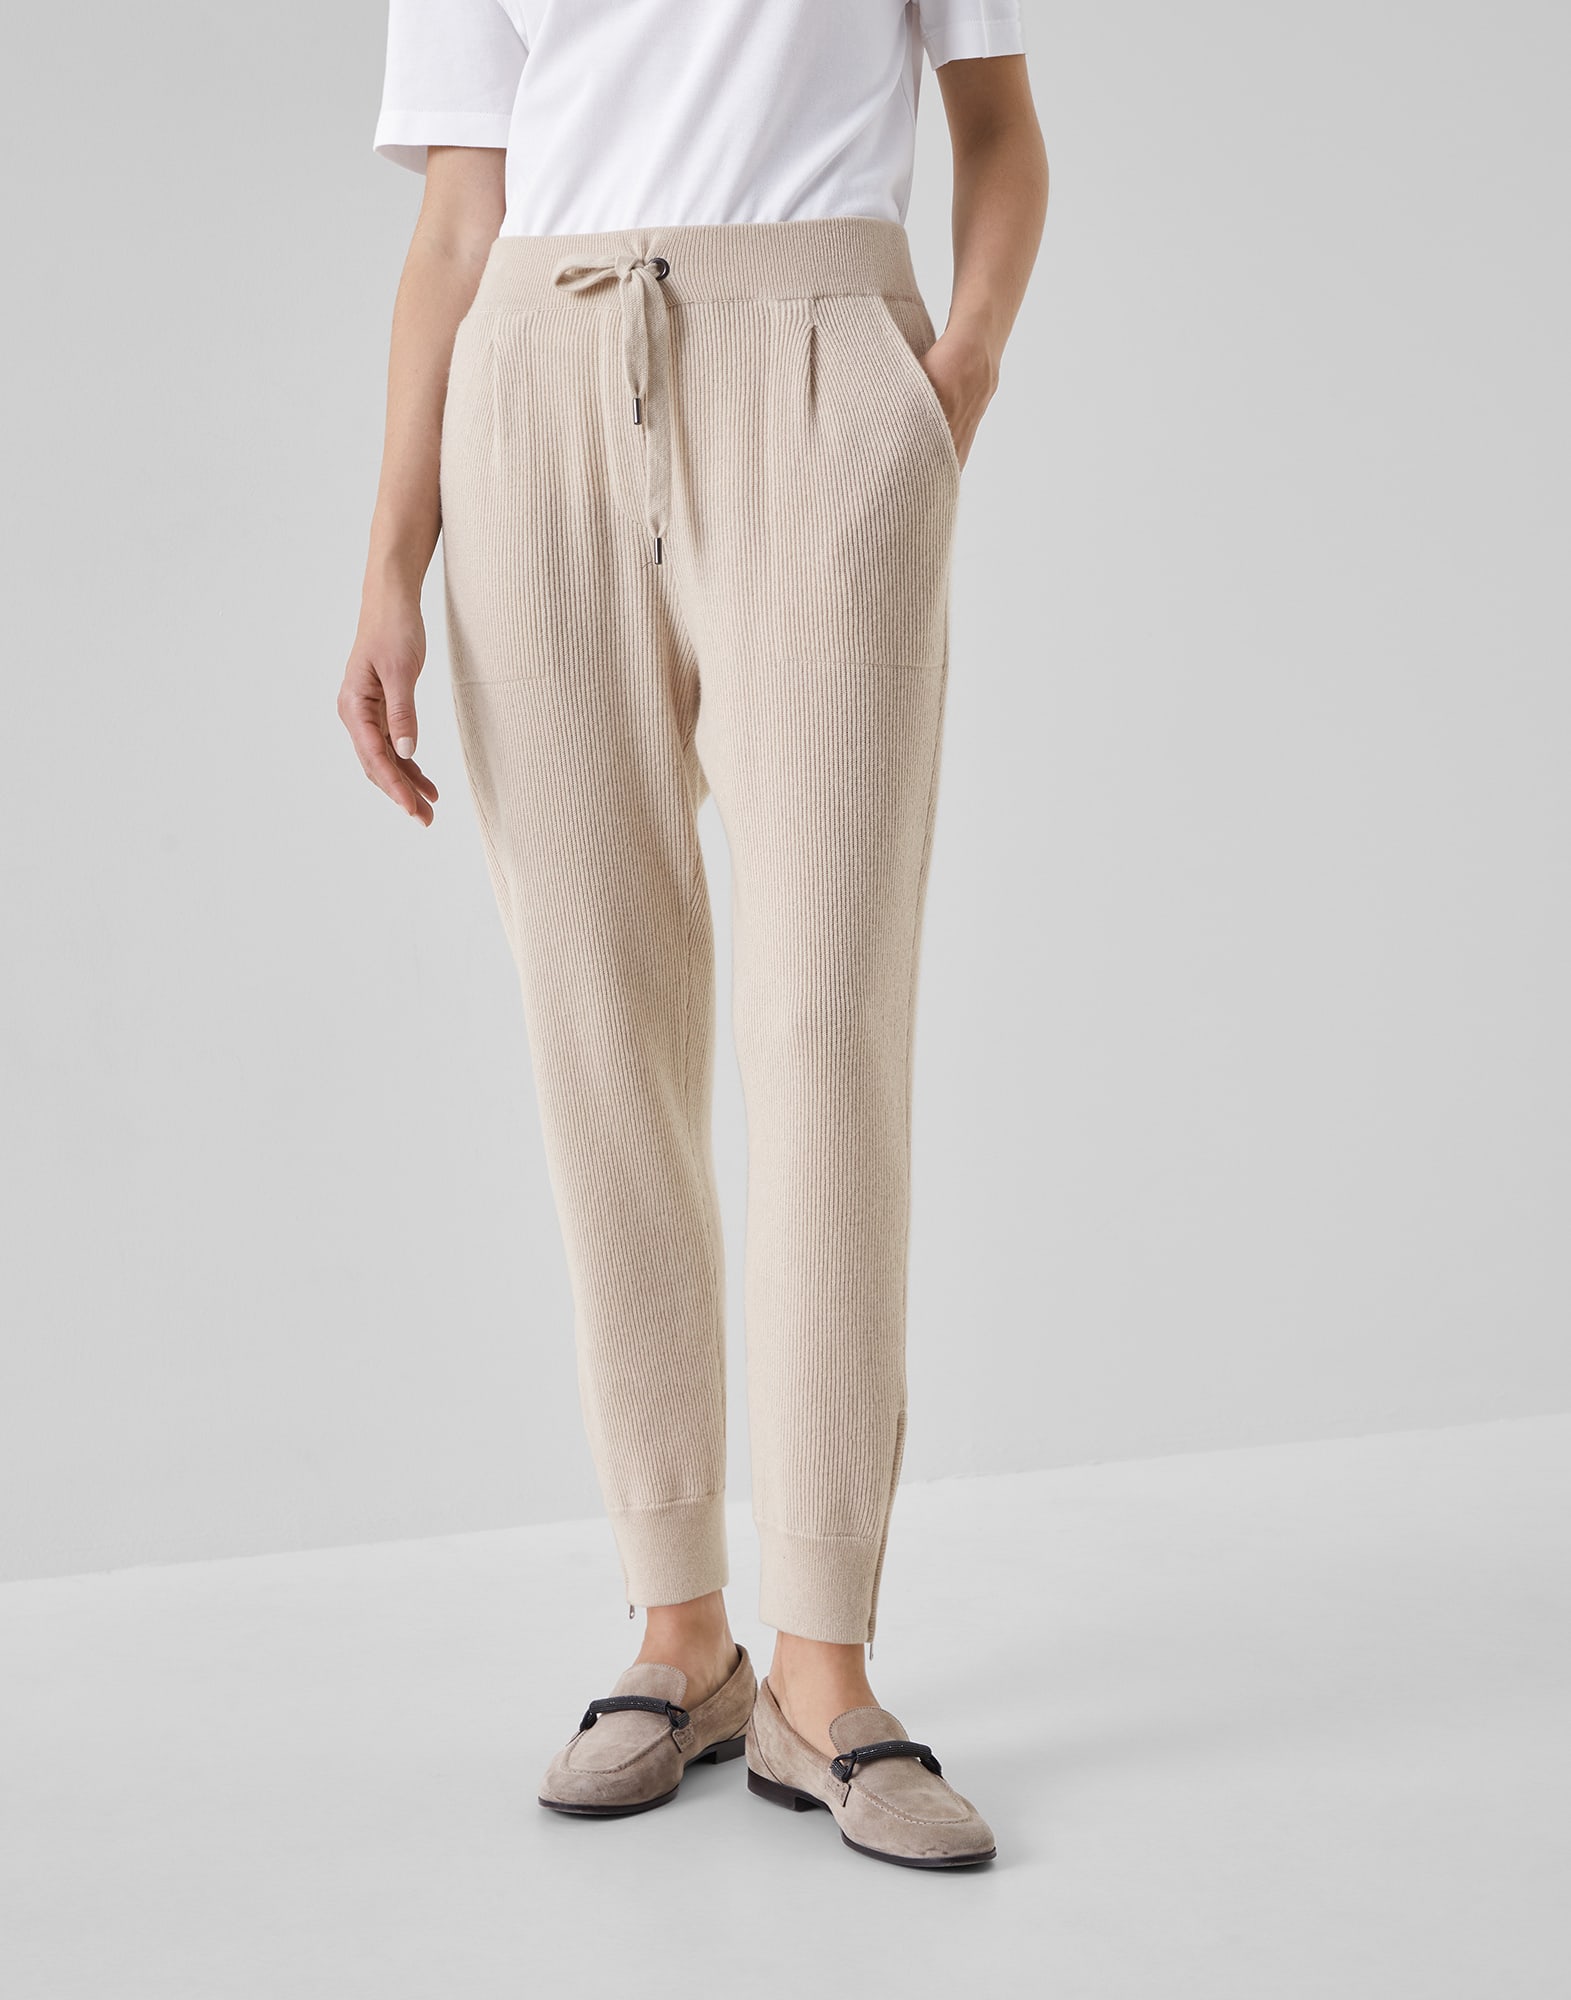 Pulcykp Women Cashmere Pants Soft Comfortable High-Waist Knitted